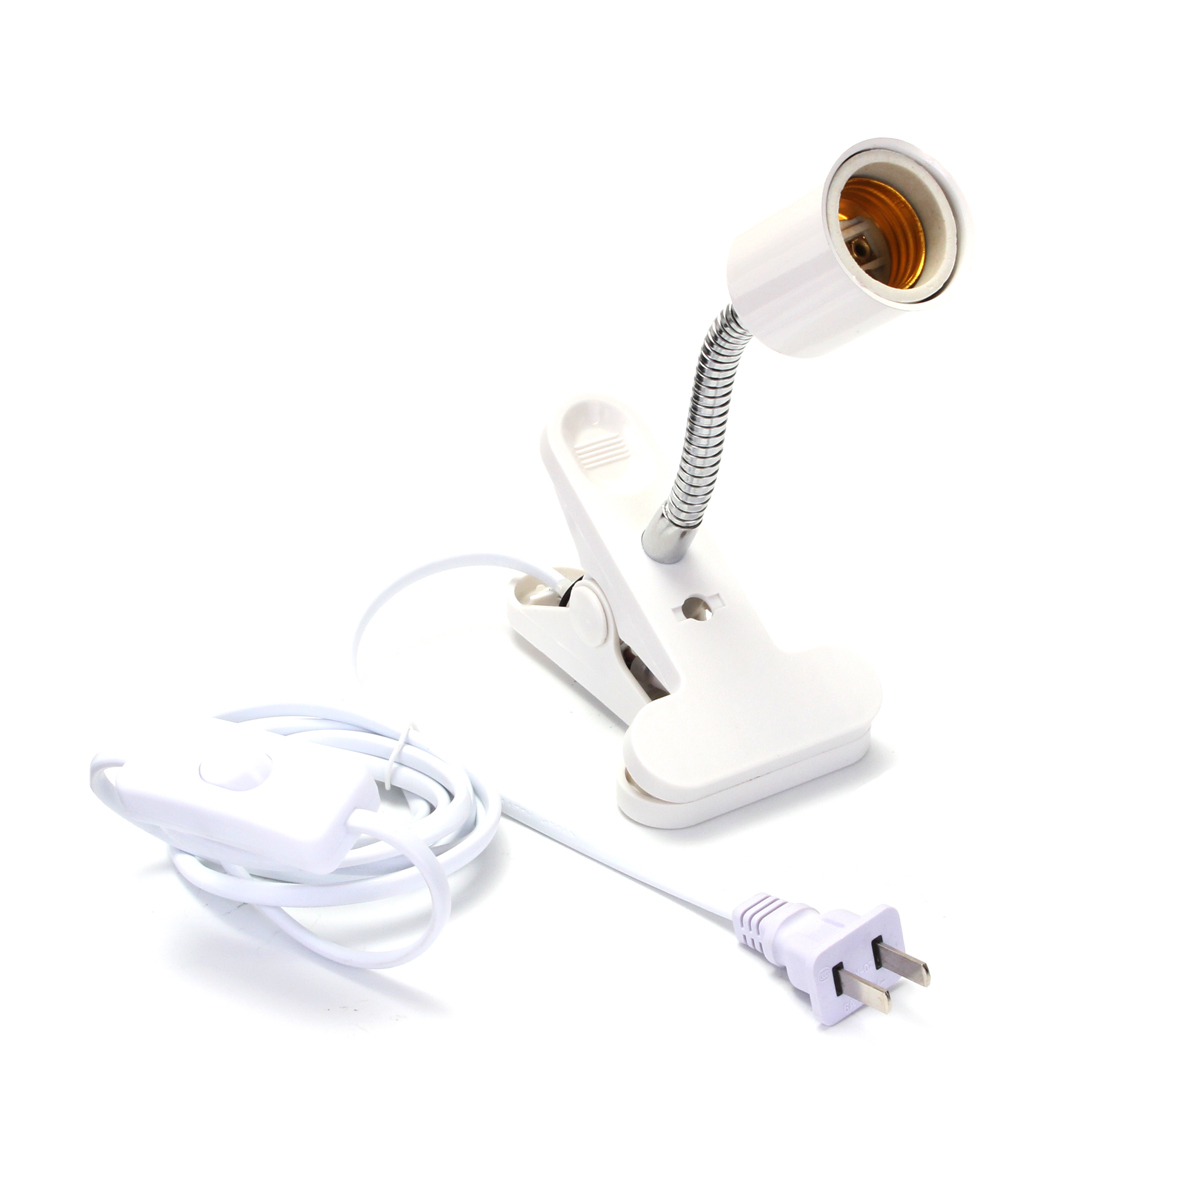 10CM-E27-Flexible-Pet-LED-Light-Lamp-Bulb-Adapter-Holder-Socket-with-Clip-On-Off-Switch-EU-US-Plug-1309591-2